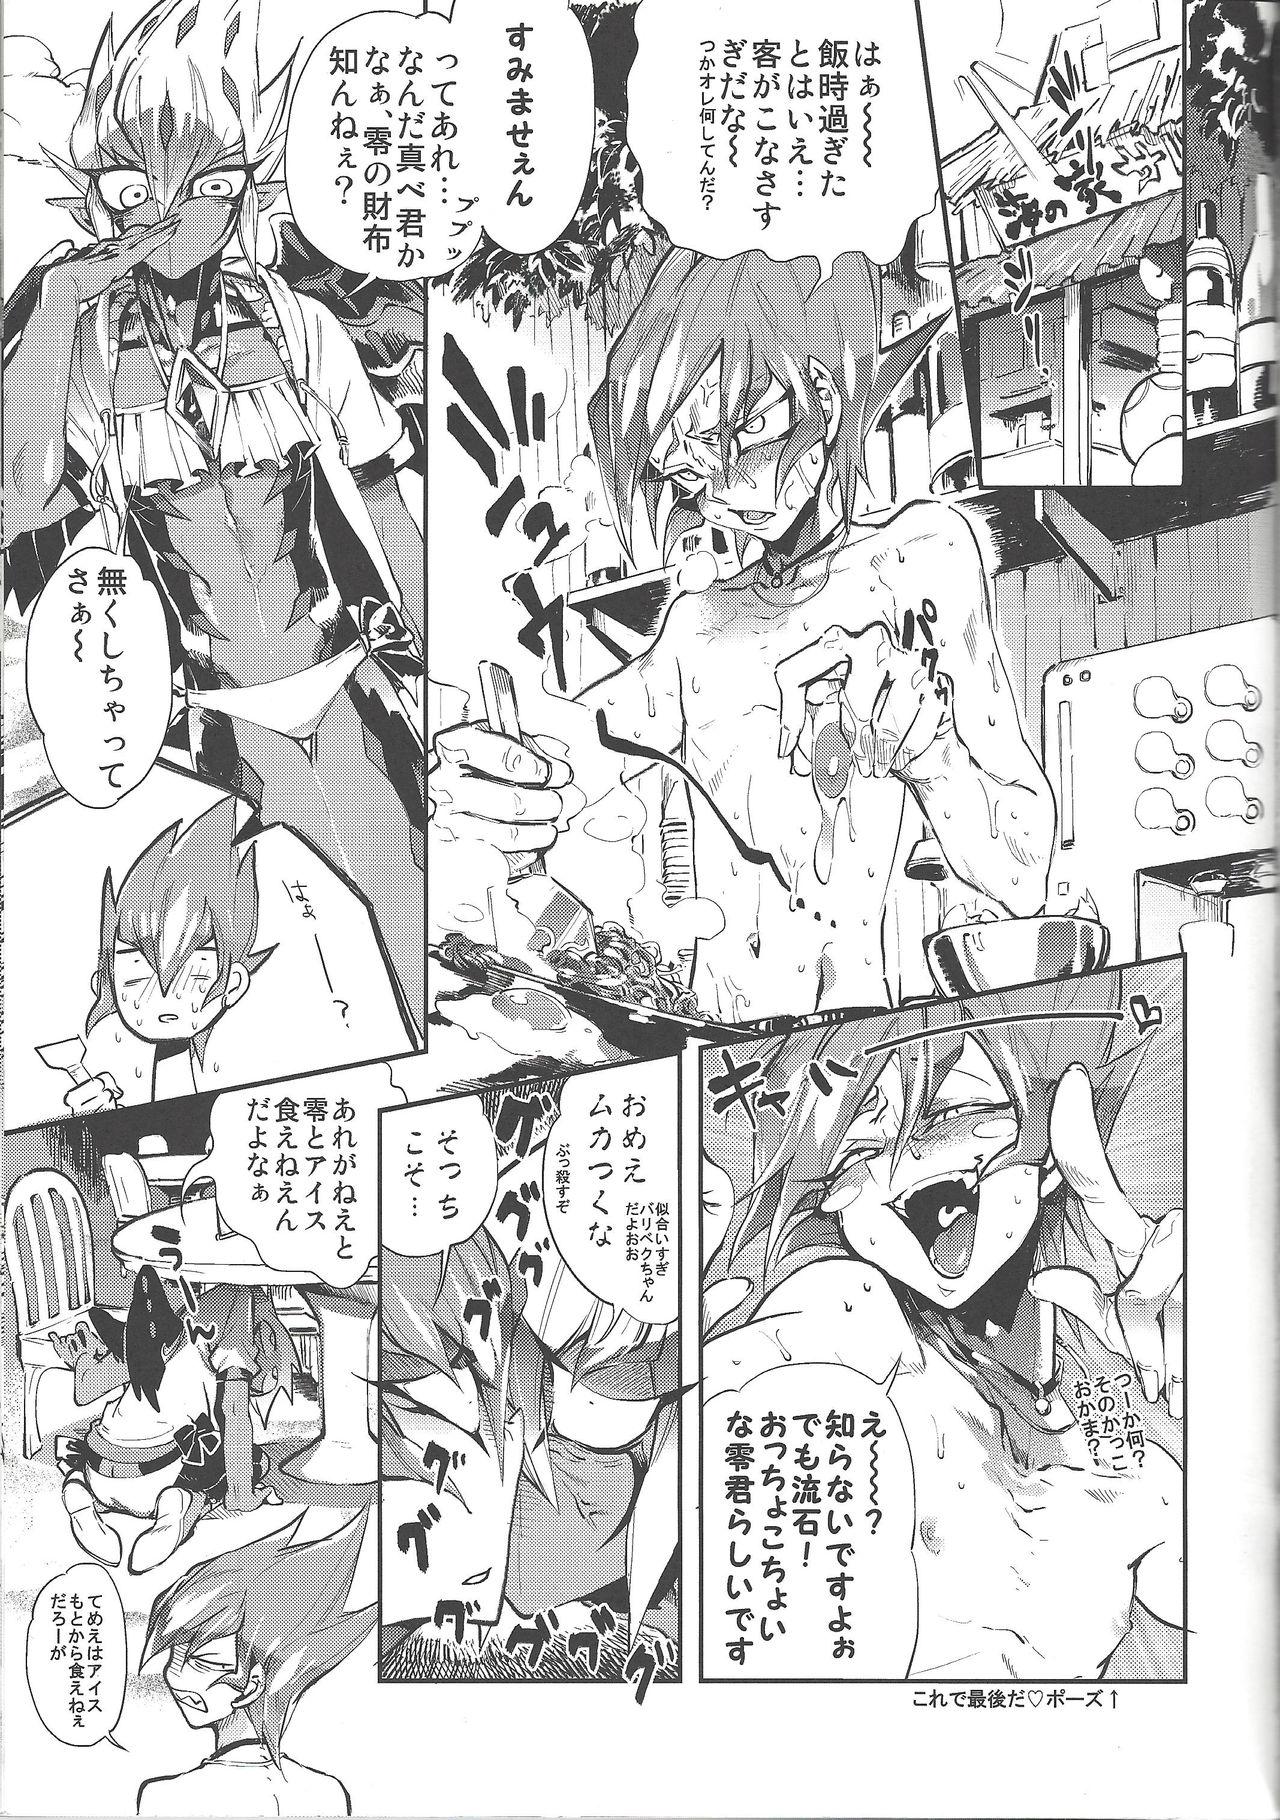 Abuse XXXX no Vec-chan 3 - Yu-gi-oh zexal Novia - Page 4